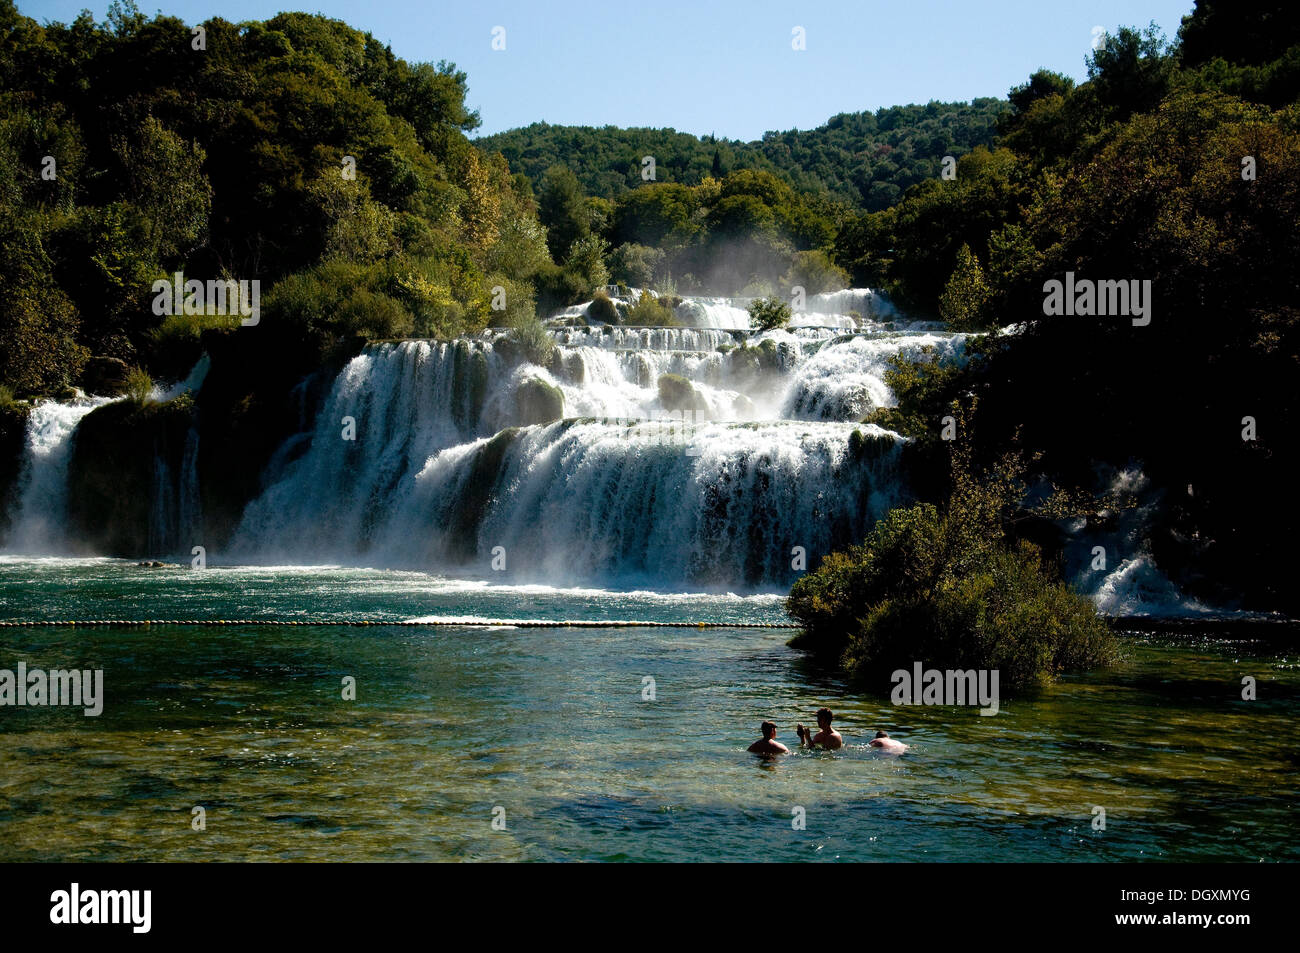 Swimmers enjoy the main waterfall, Skradinski Buk, in the Krka National Park in Croatia's Dalmatian coast Stock Photo